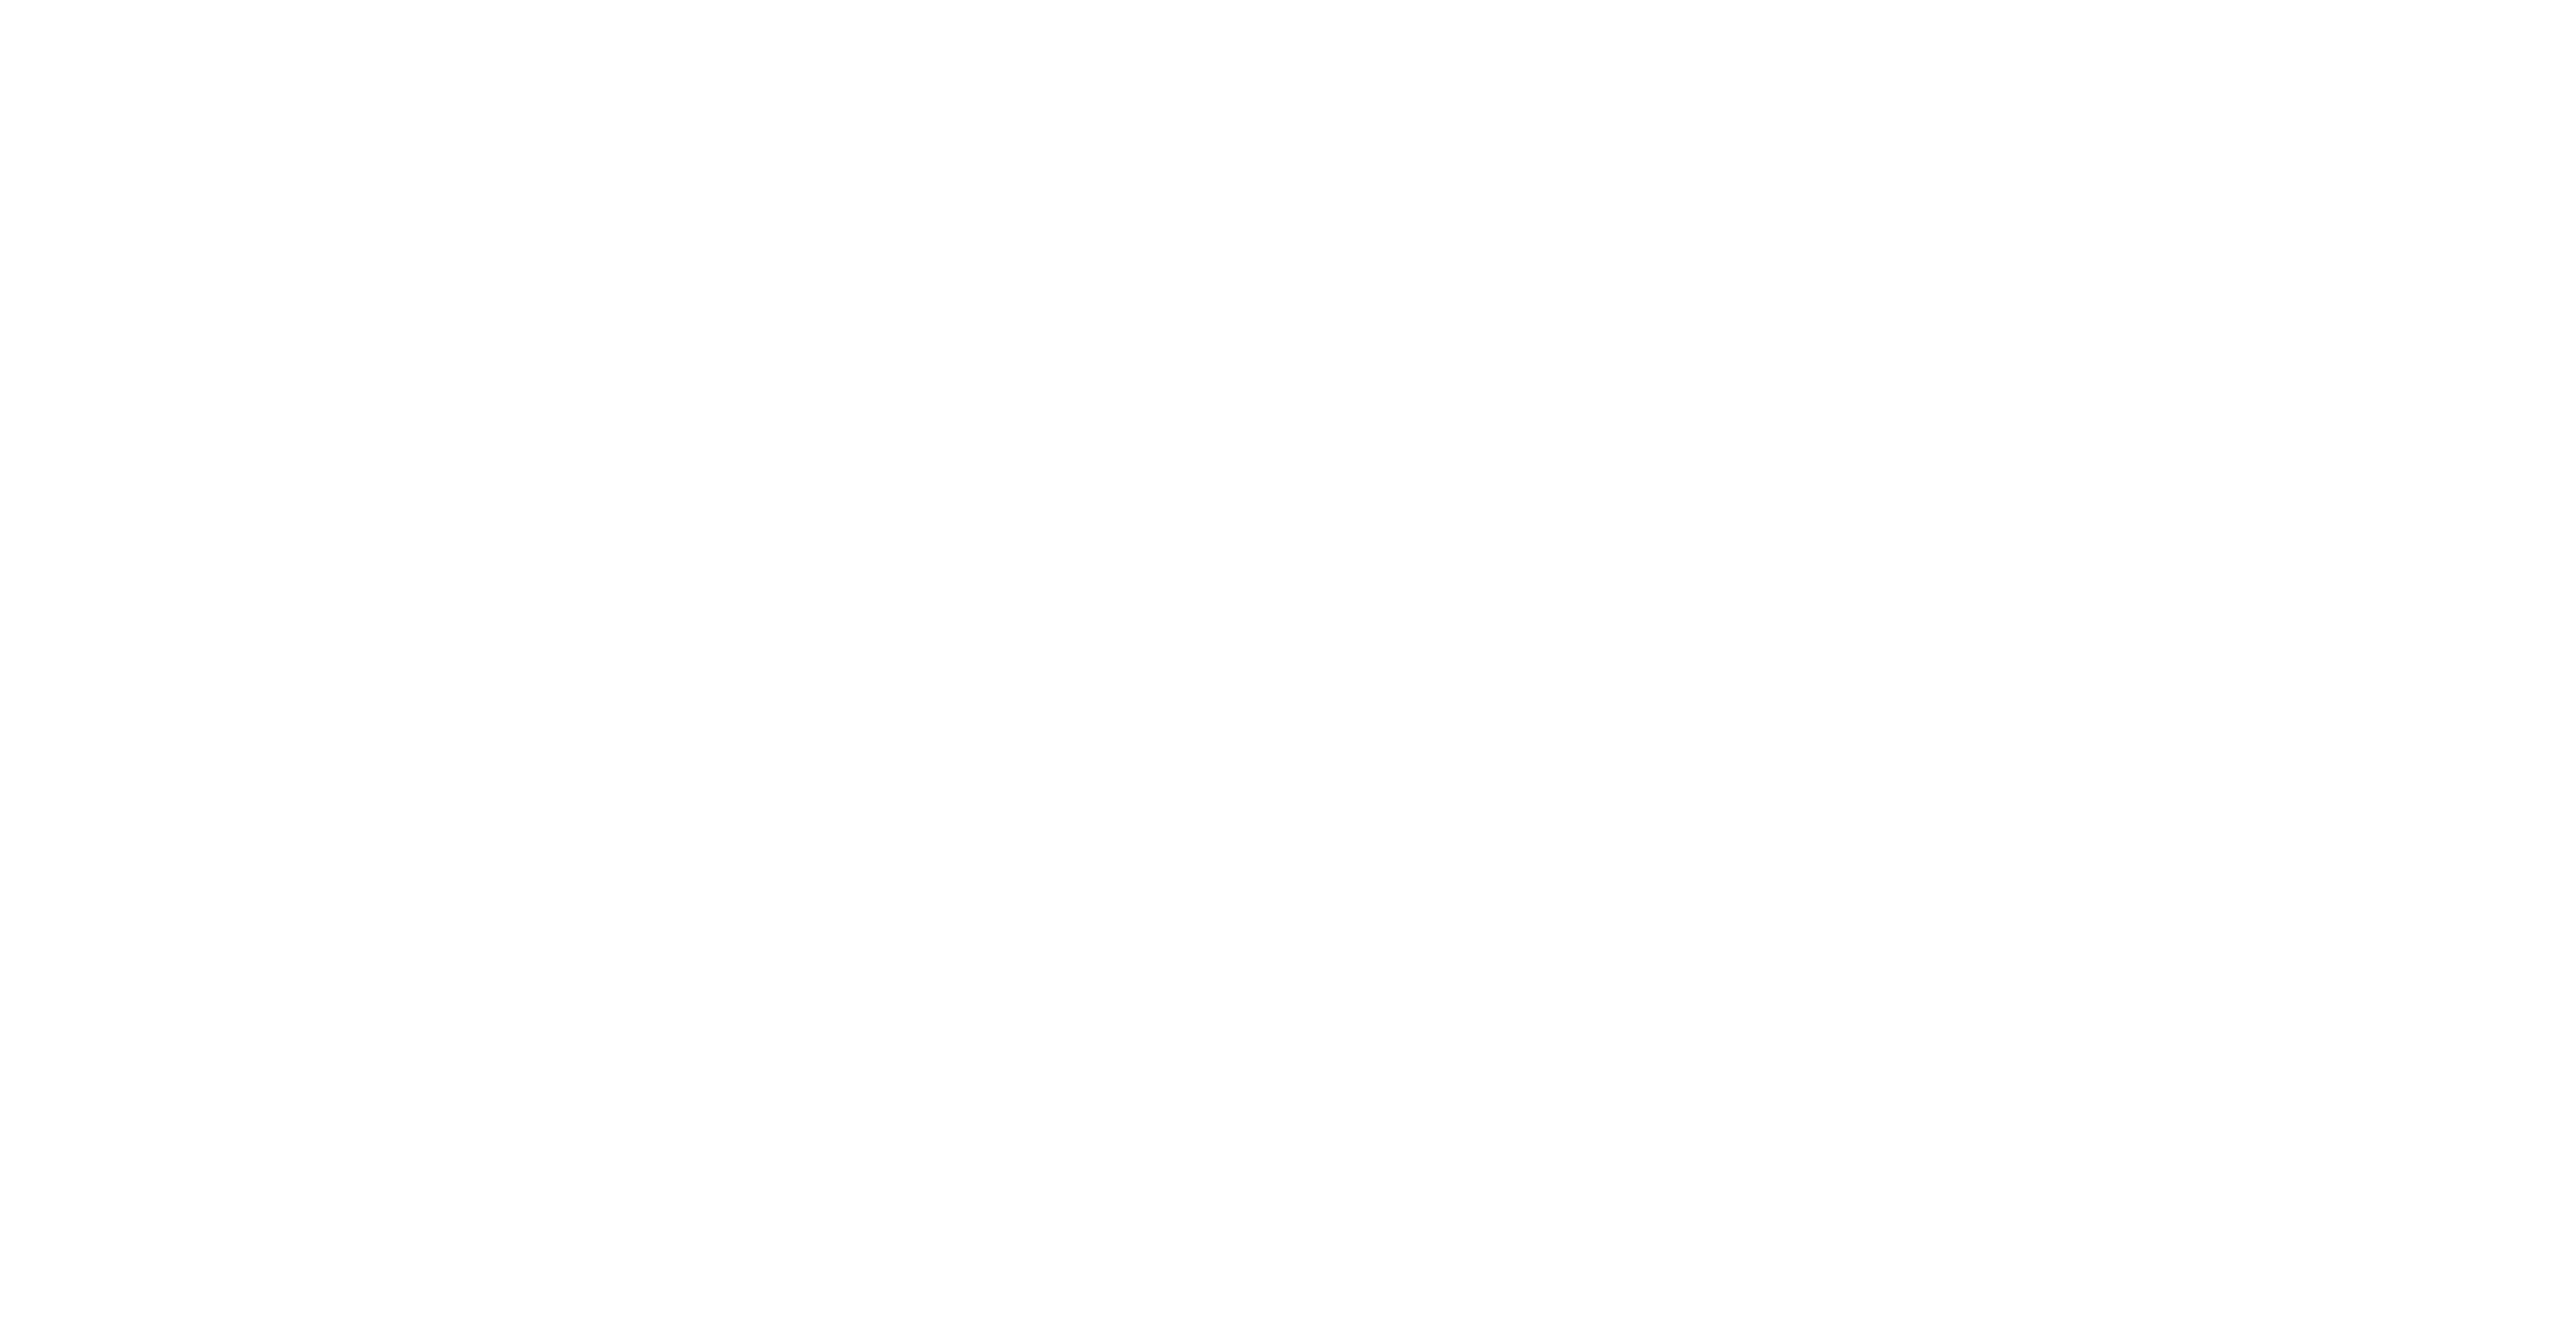 Hugh Darley